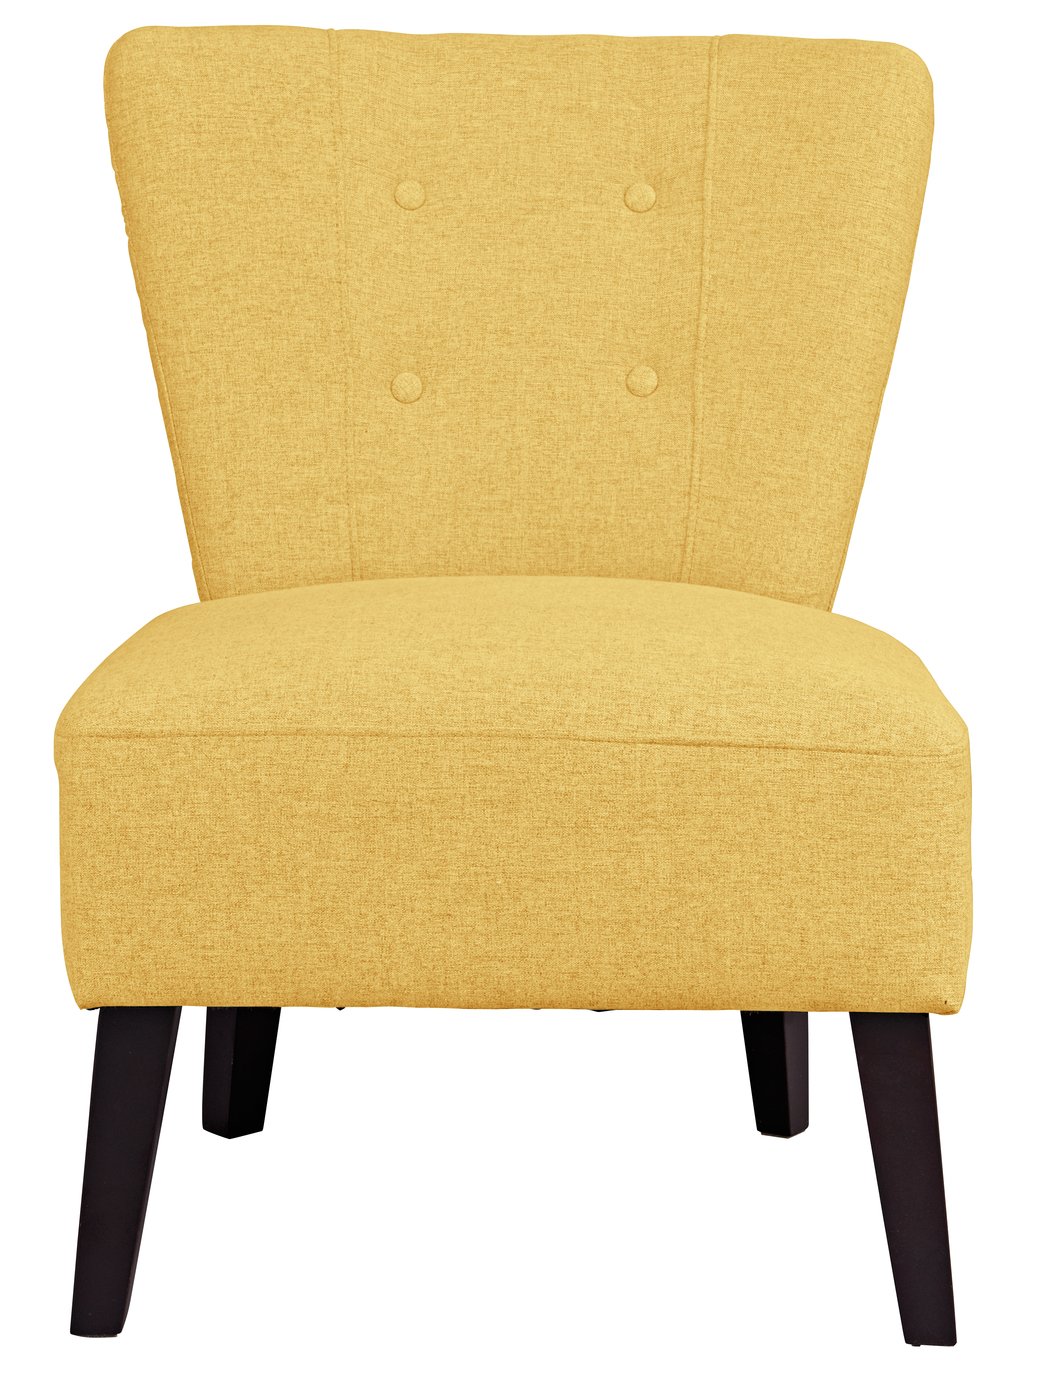 Argos Home Delilah Fabric Cocktail Chair - Yellow (8529129) | Argos